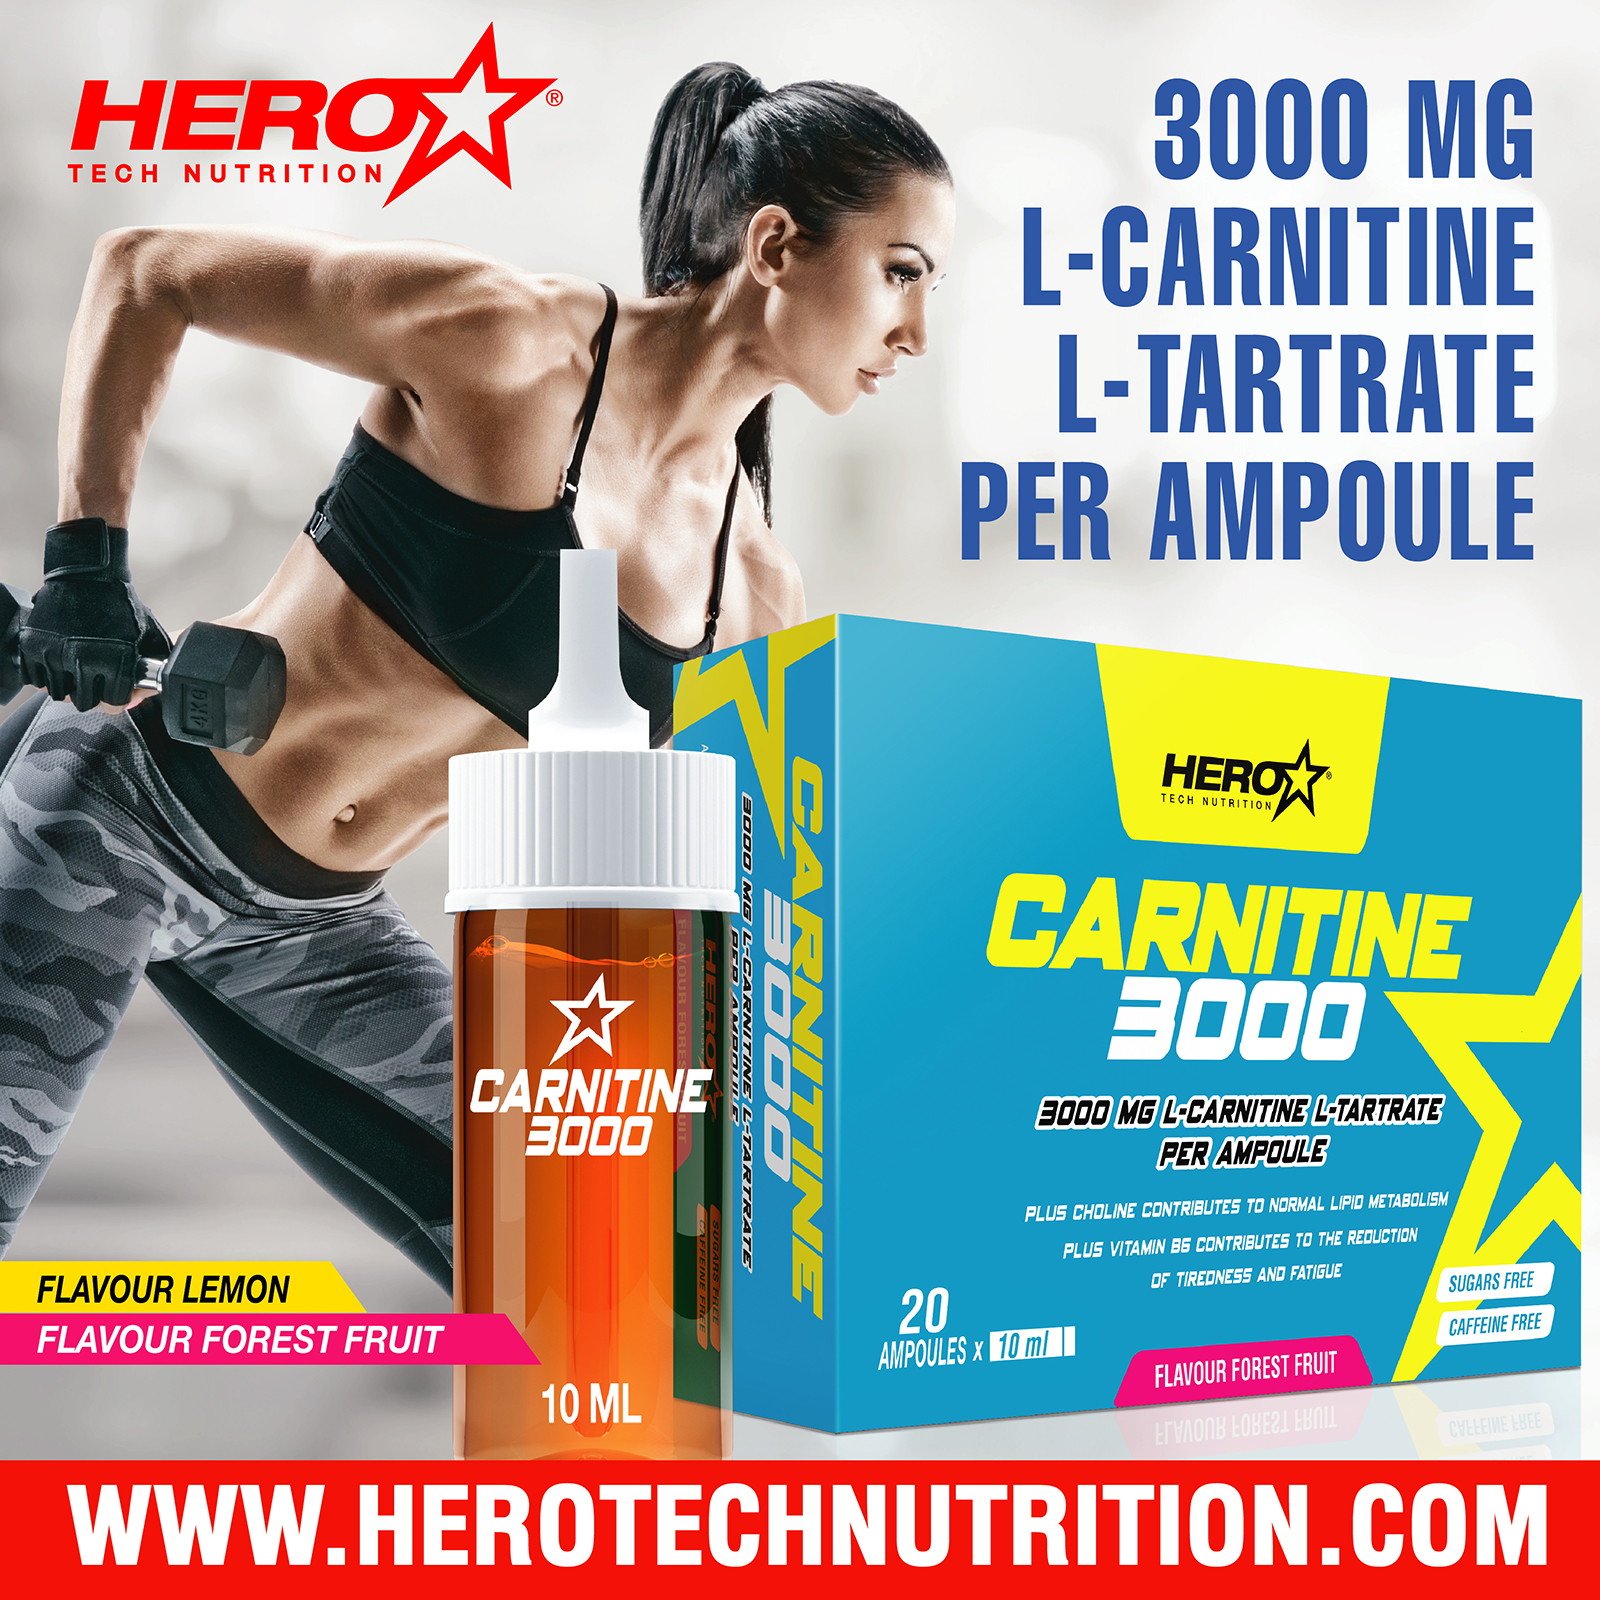 CARNITINE 3000 HERO TECH NUTRITION WEIGHT CONTROL